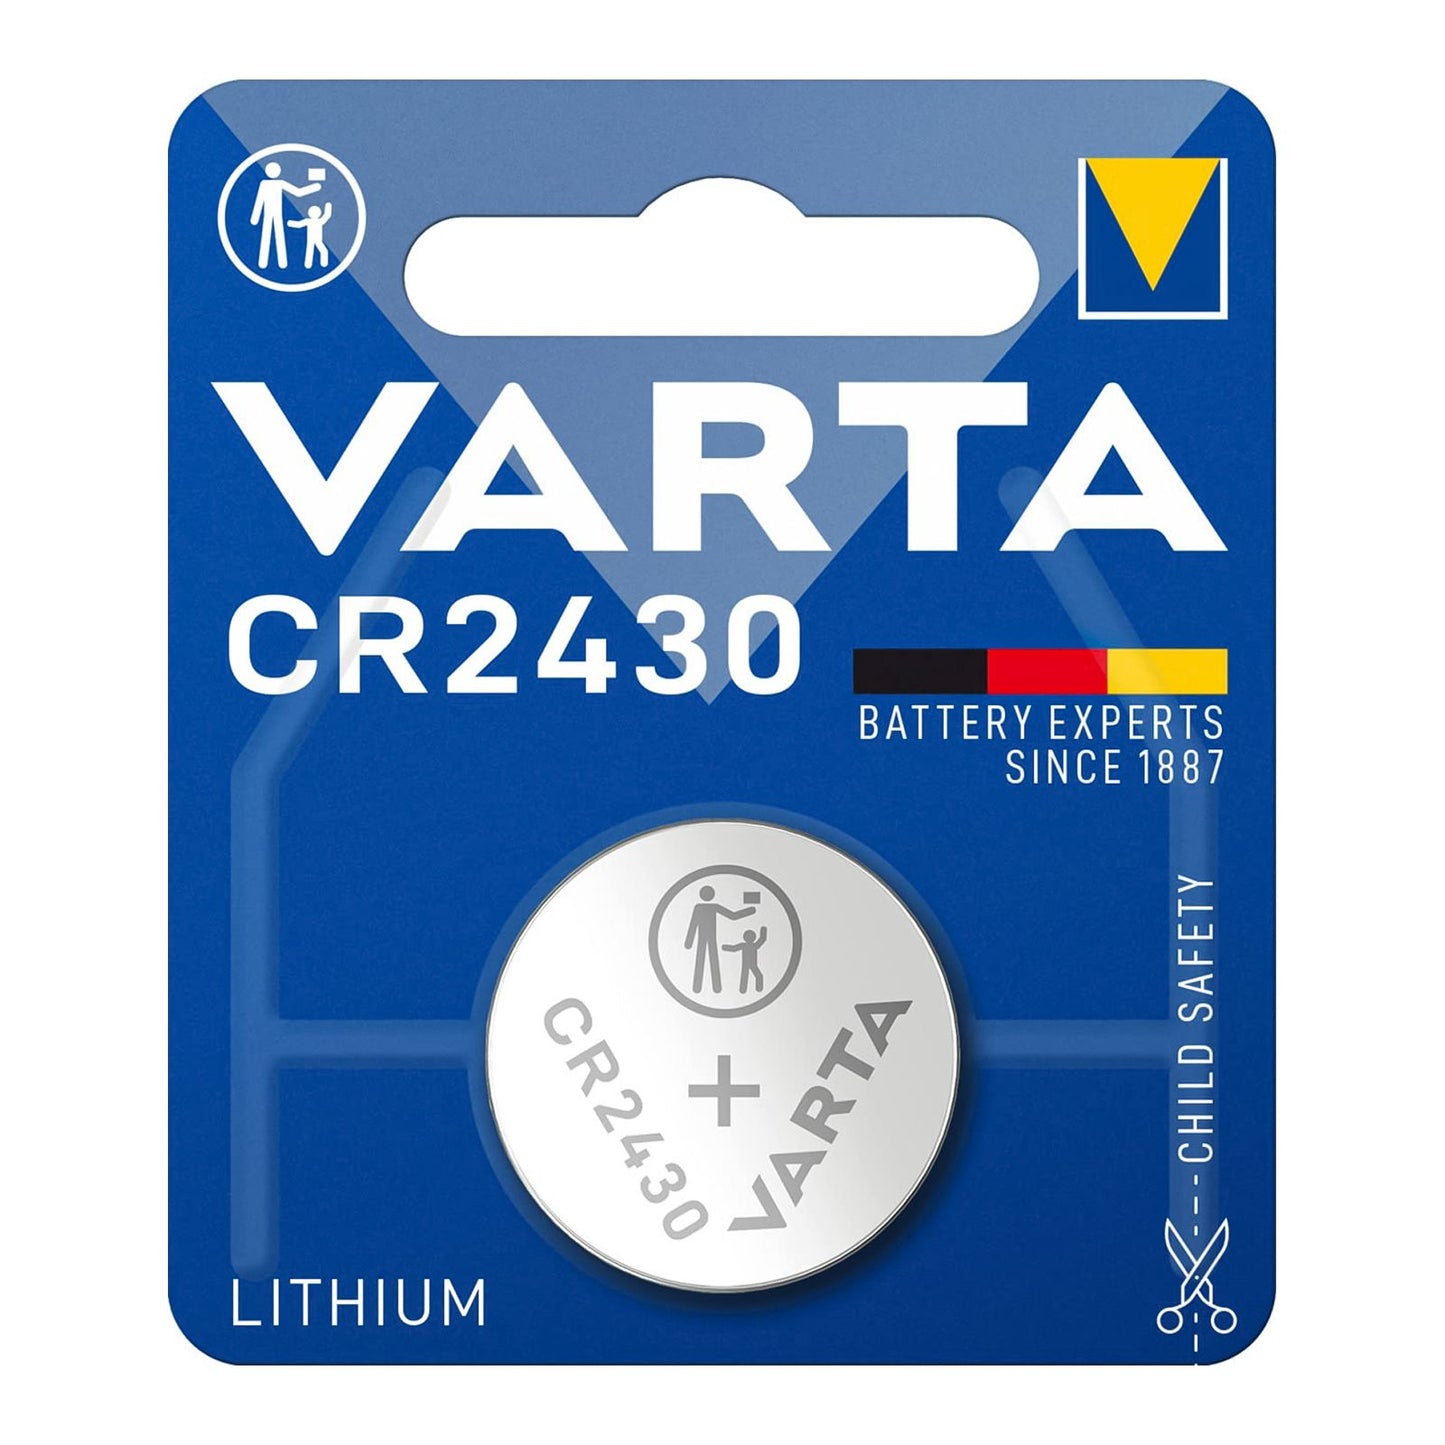 VARTA CR2430 Batteria al litio a bottone 3V, pila piatta, specialistica, diametro 24,5mm